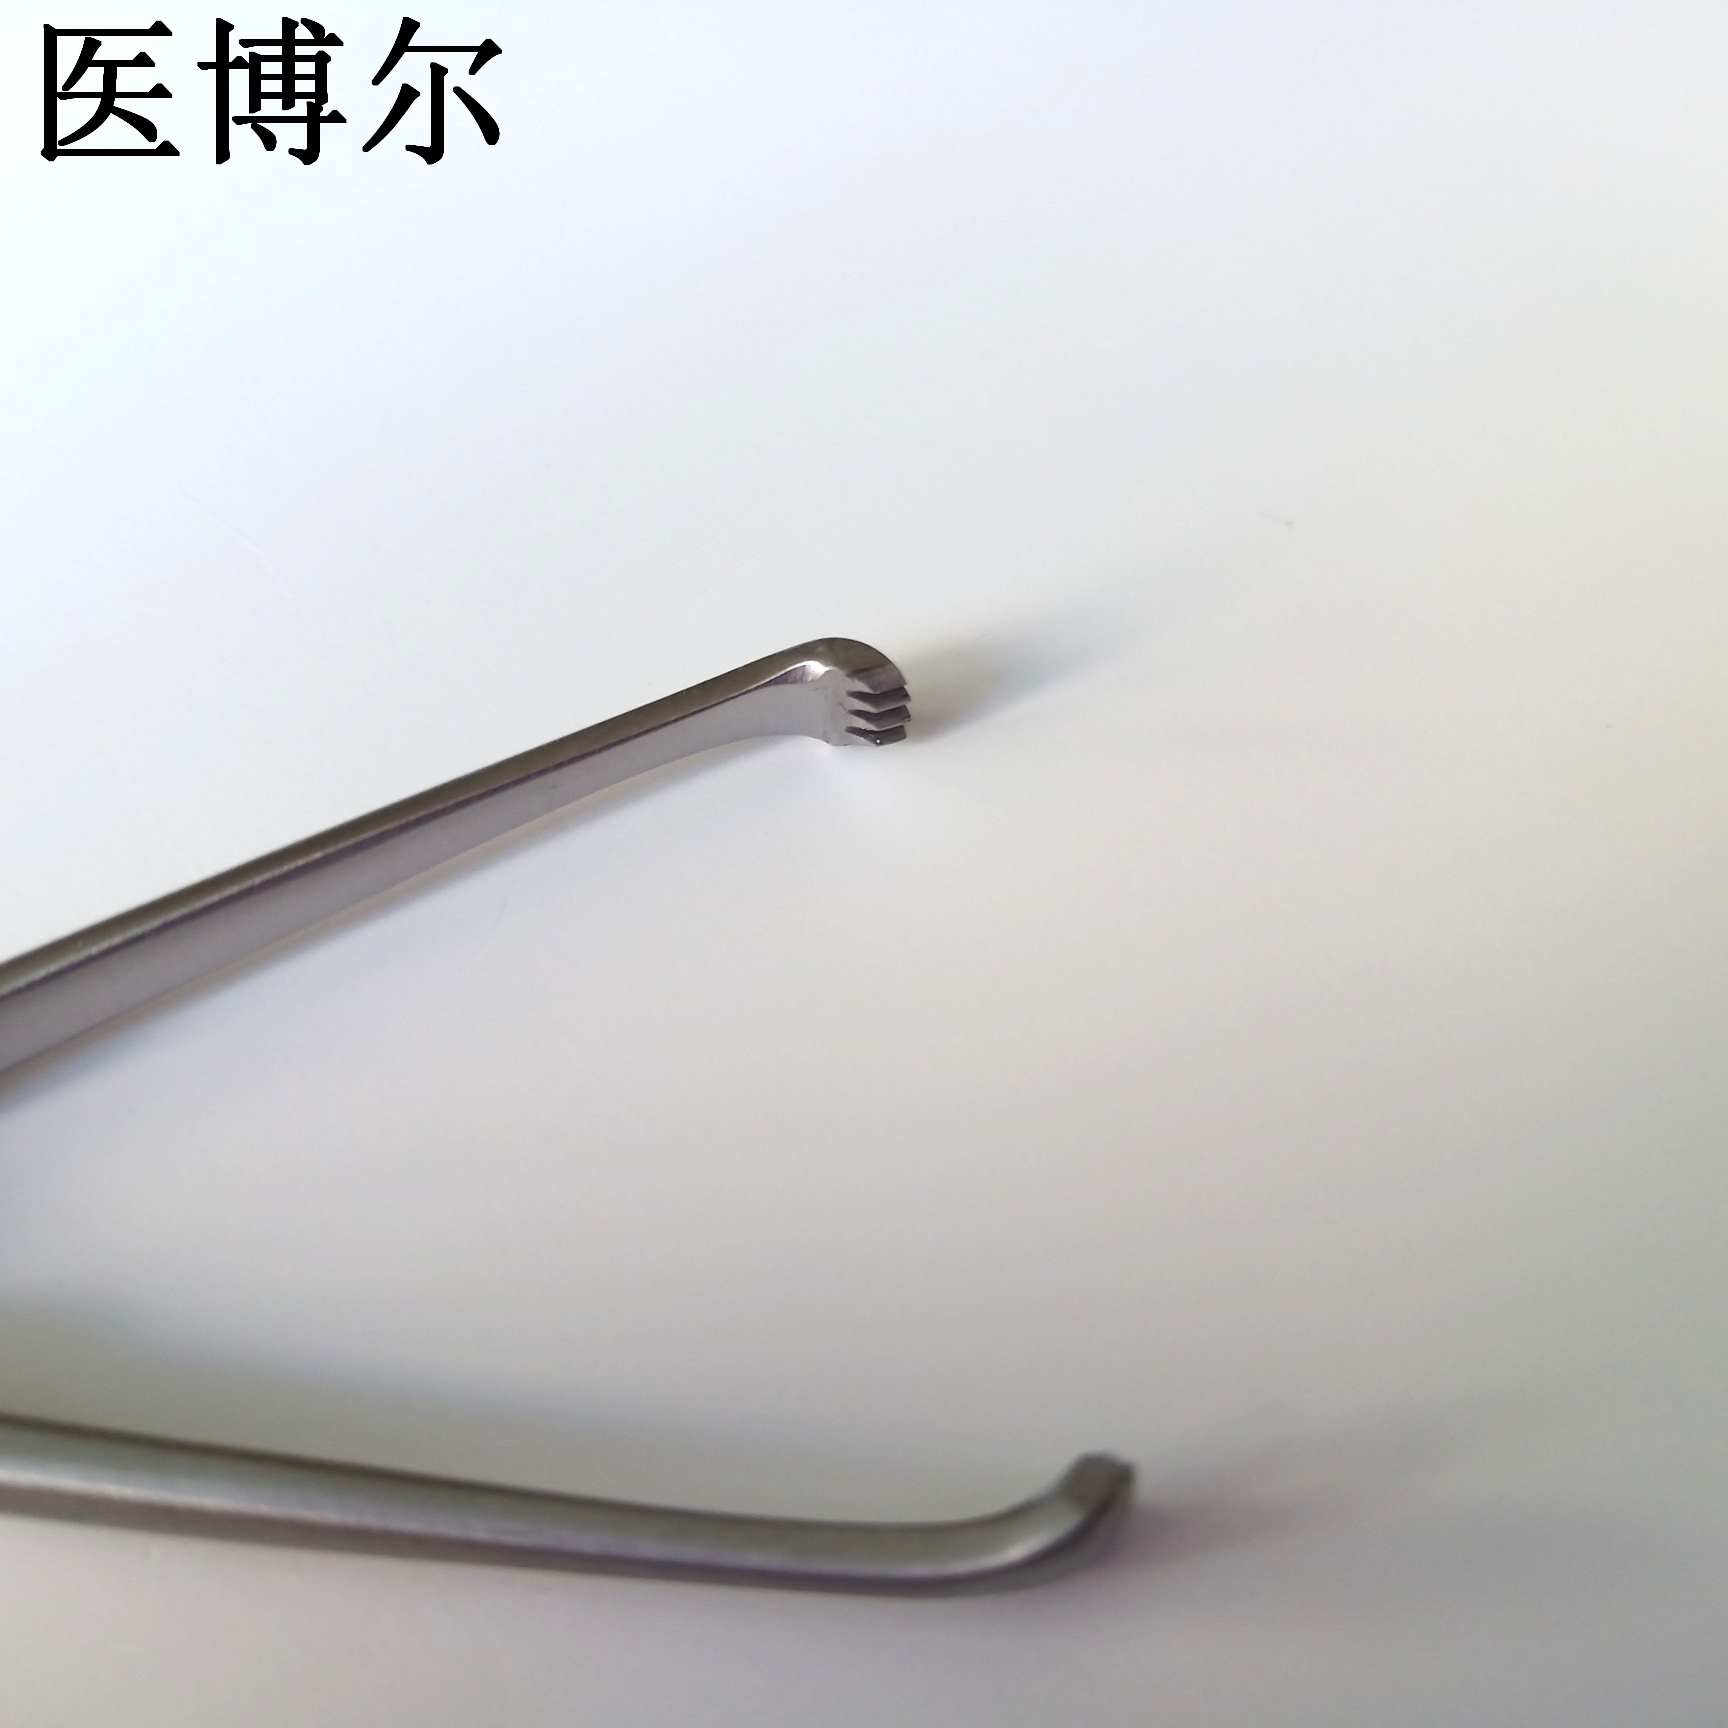 14cm组织钳 (1)_看图王.jpg